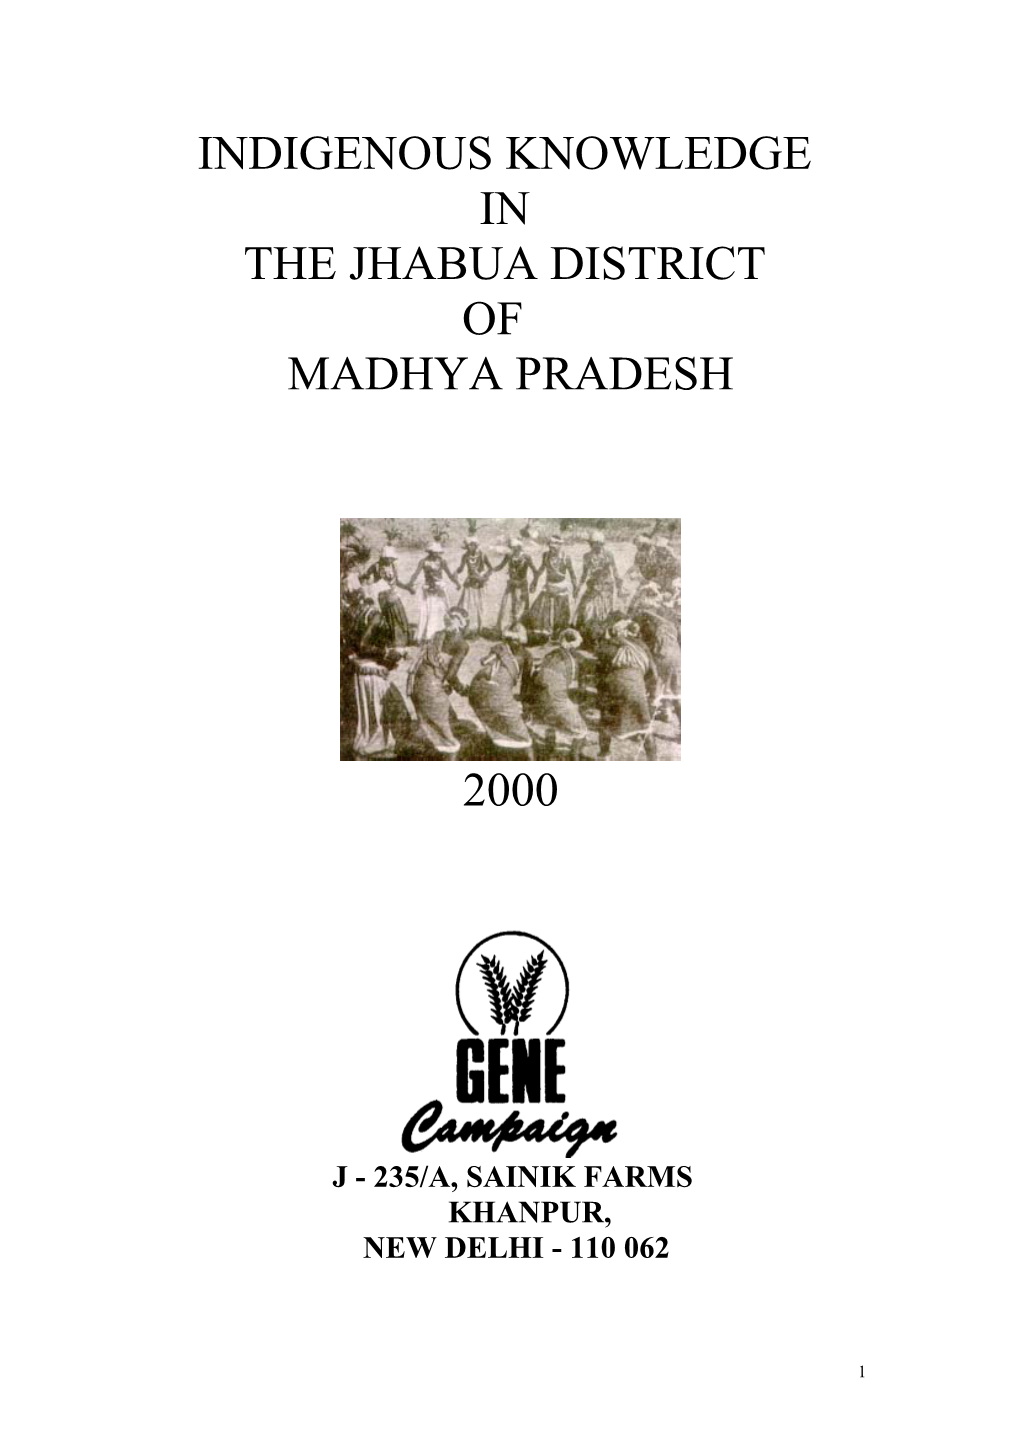 Indigenous Knowledge in the Jhabua District of Madhya Pradesh